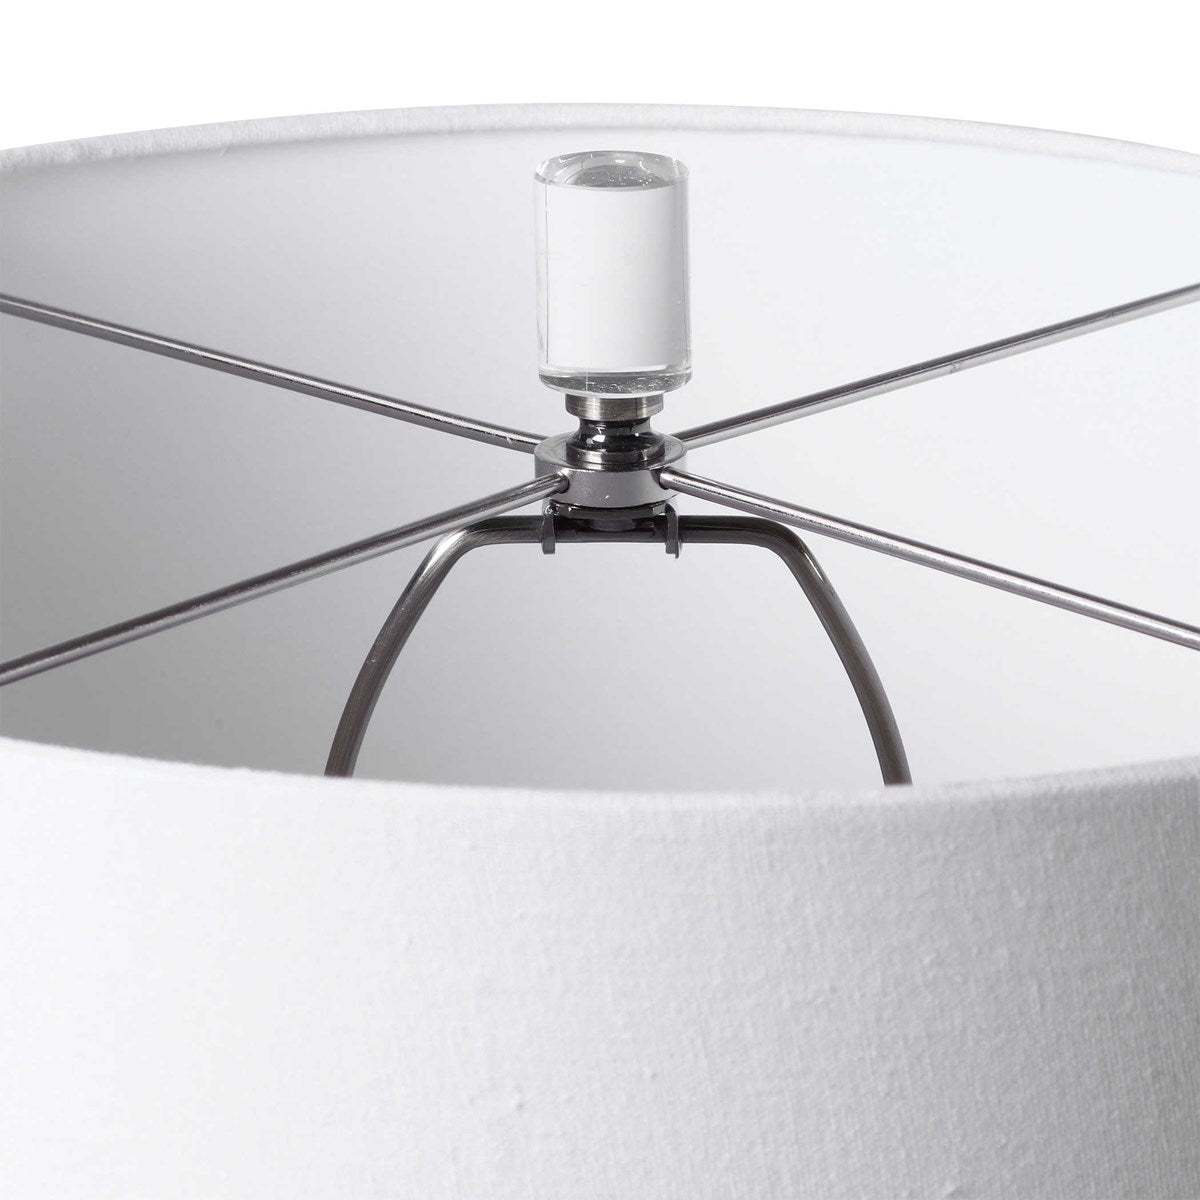 Sinclair Table Lamp, White